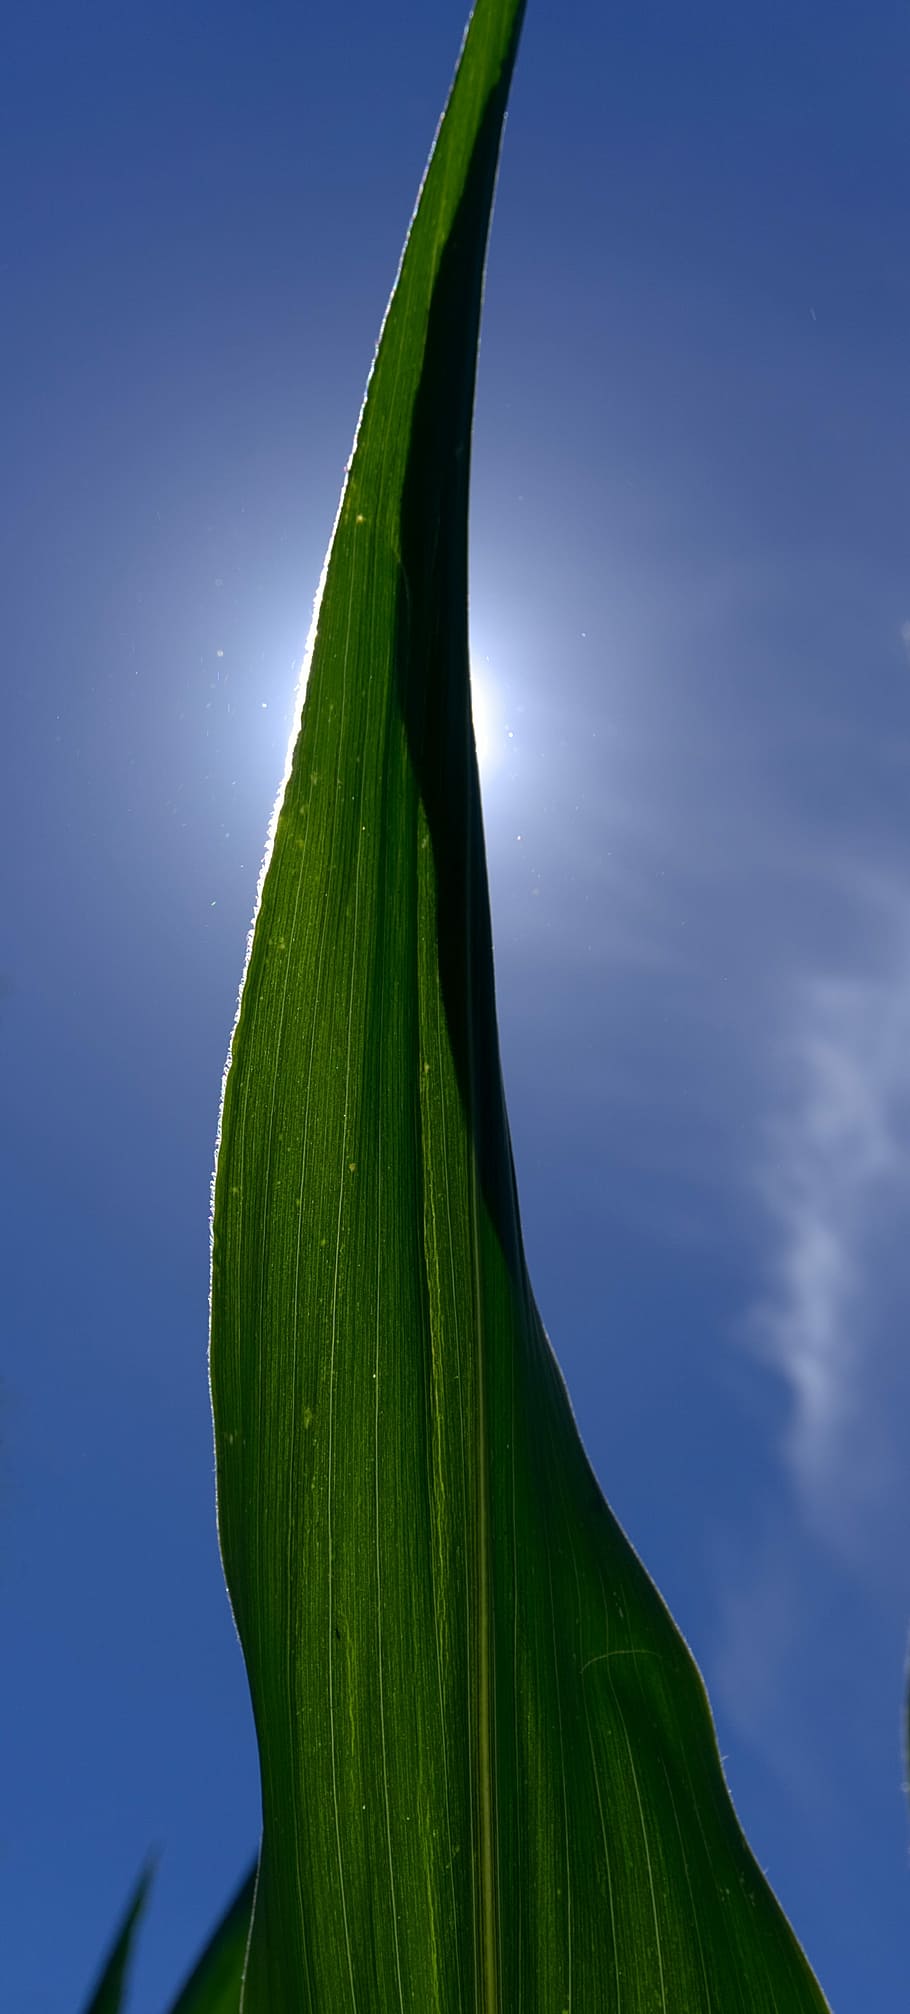 Corn, Leaf, Back Light, Sun, corn leaf, sunbeam, sky, blue, green, leaves